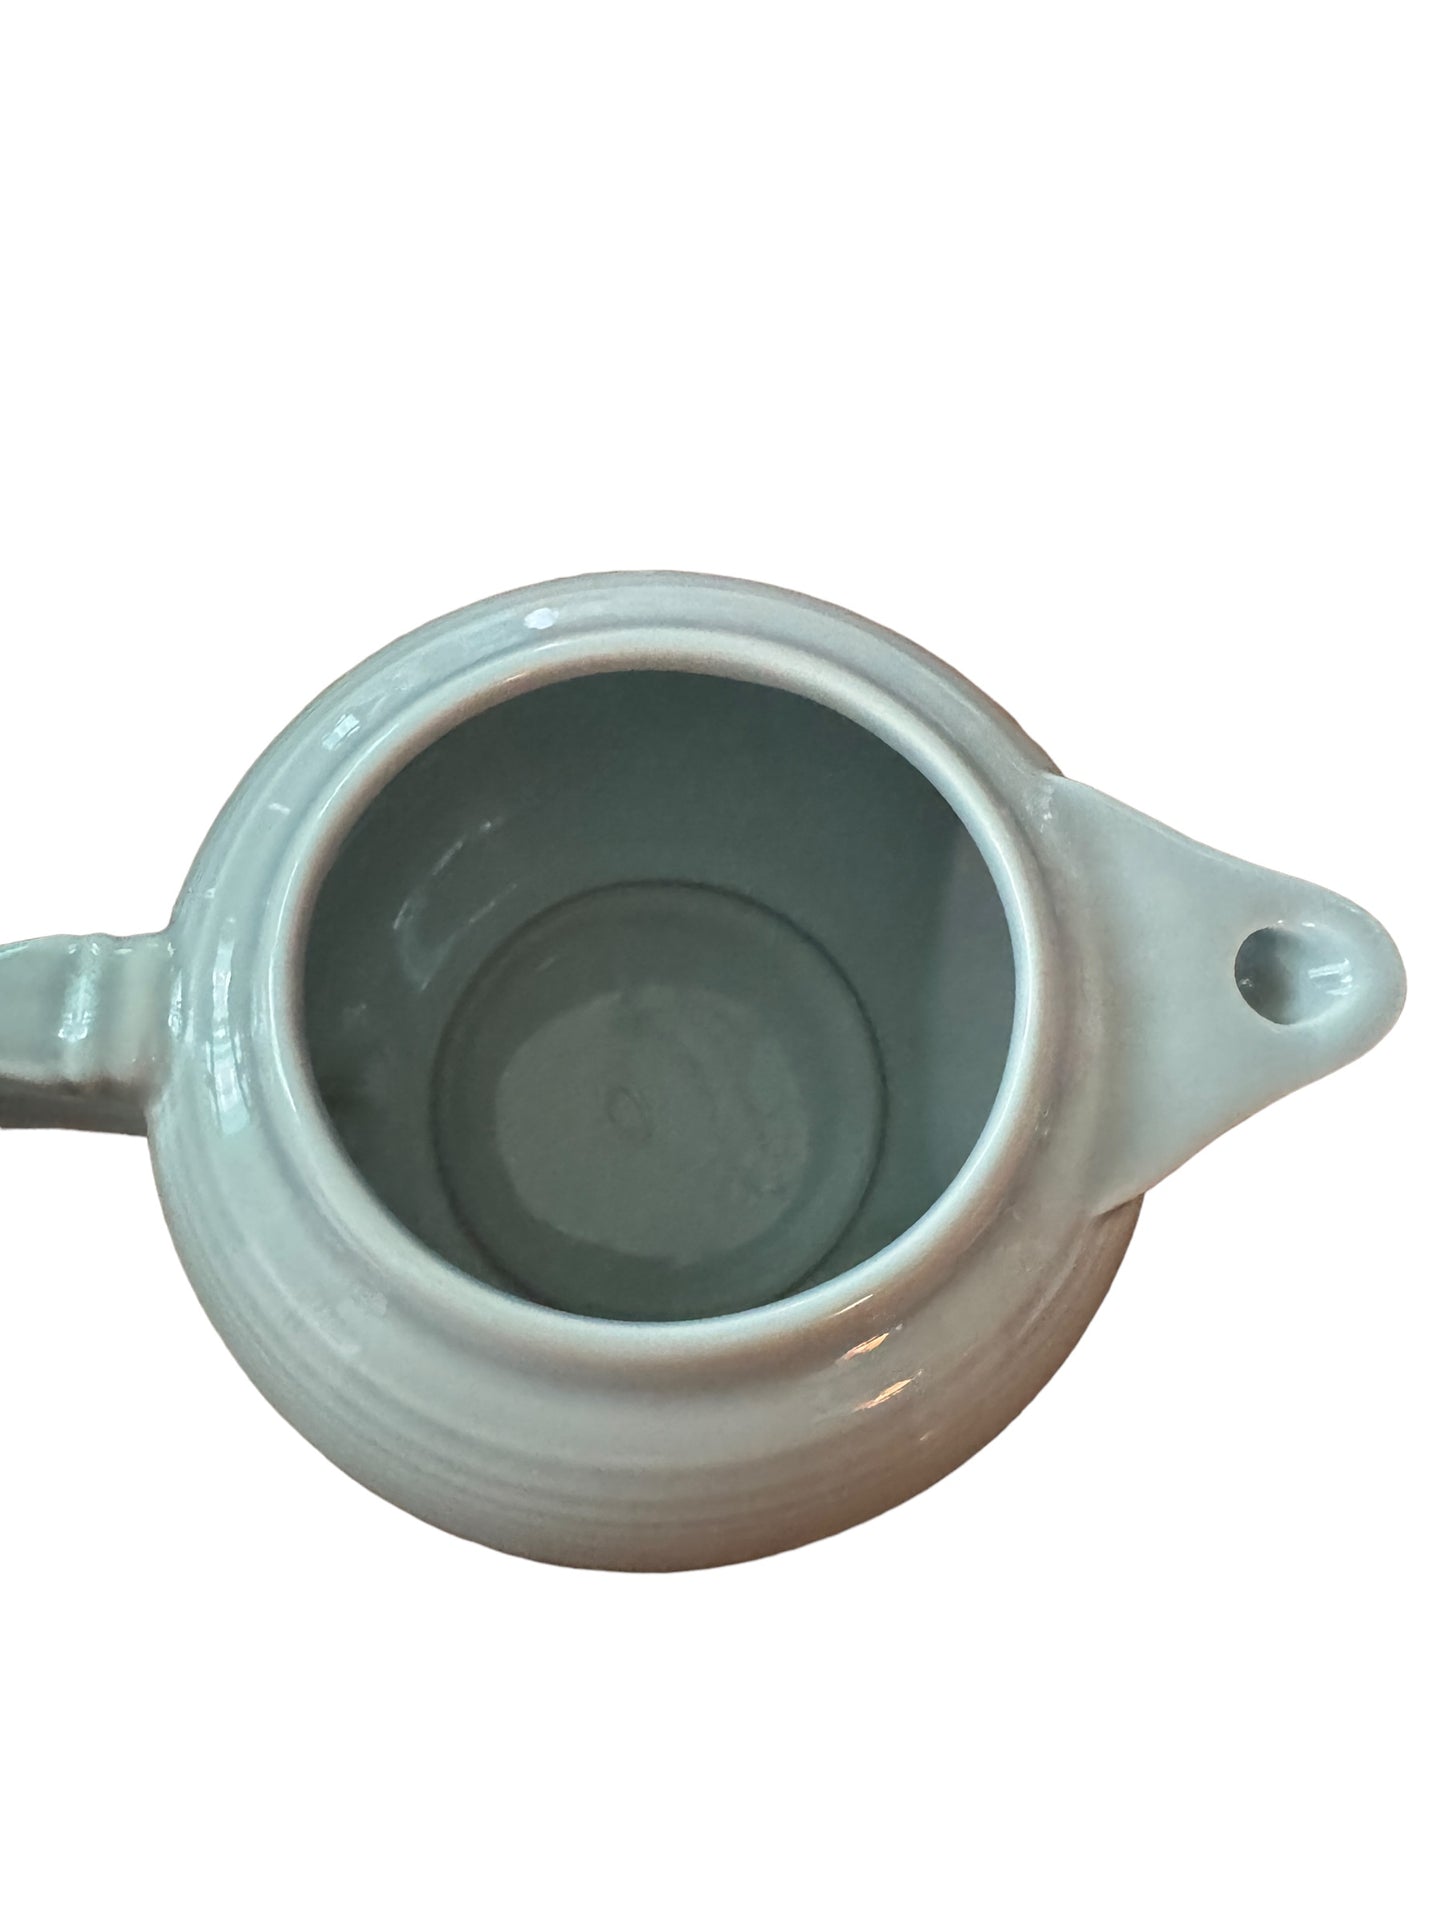 Fiesta 2 Cup Teapot in Pearl Grey